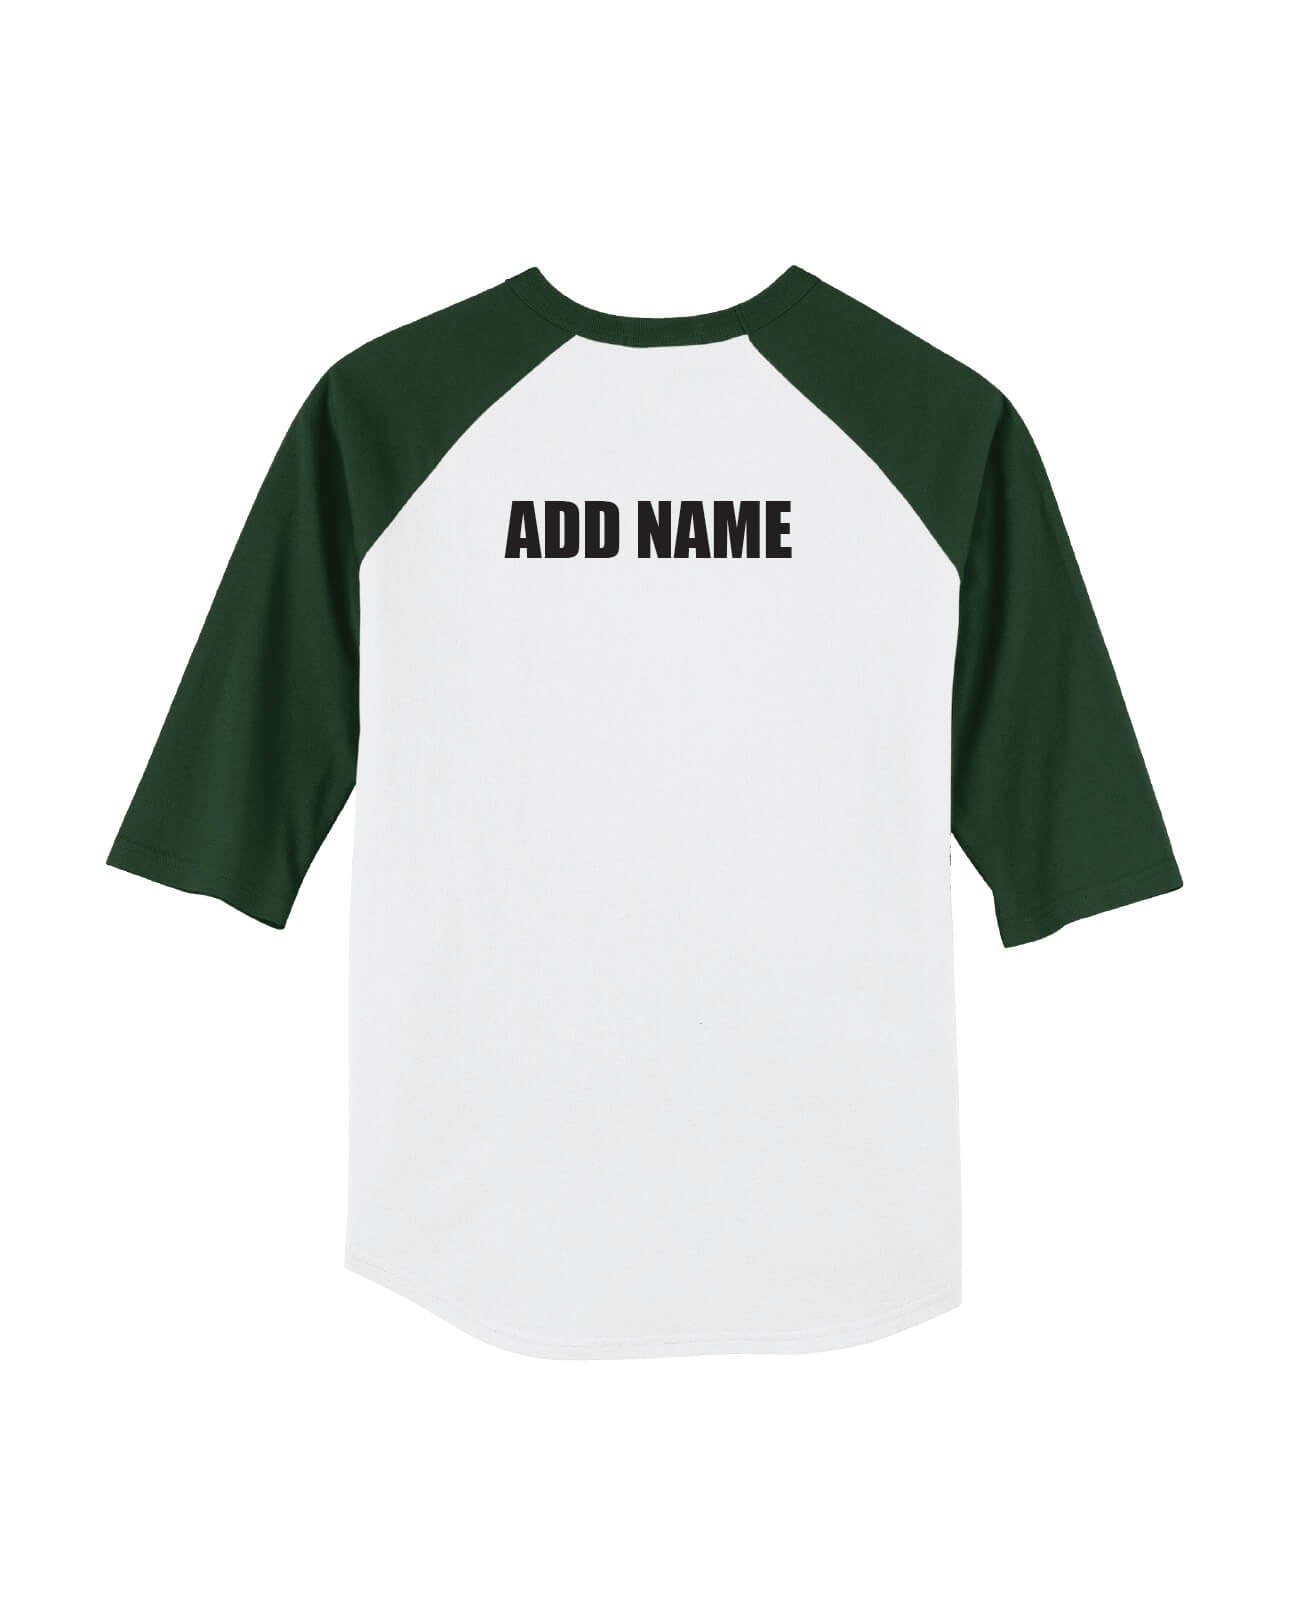 Notre Dame Sport Tek Colorblock Raglan Jersey green/white back